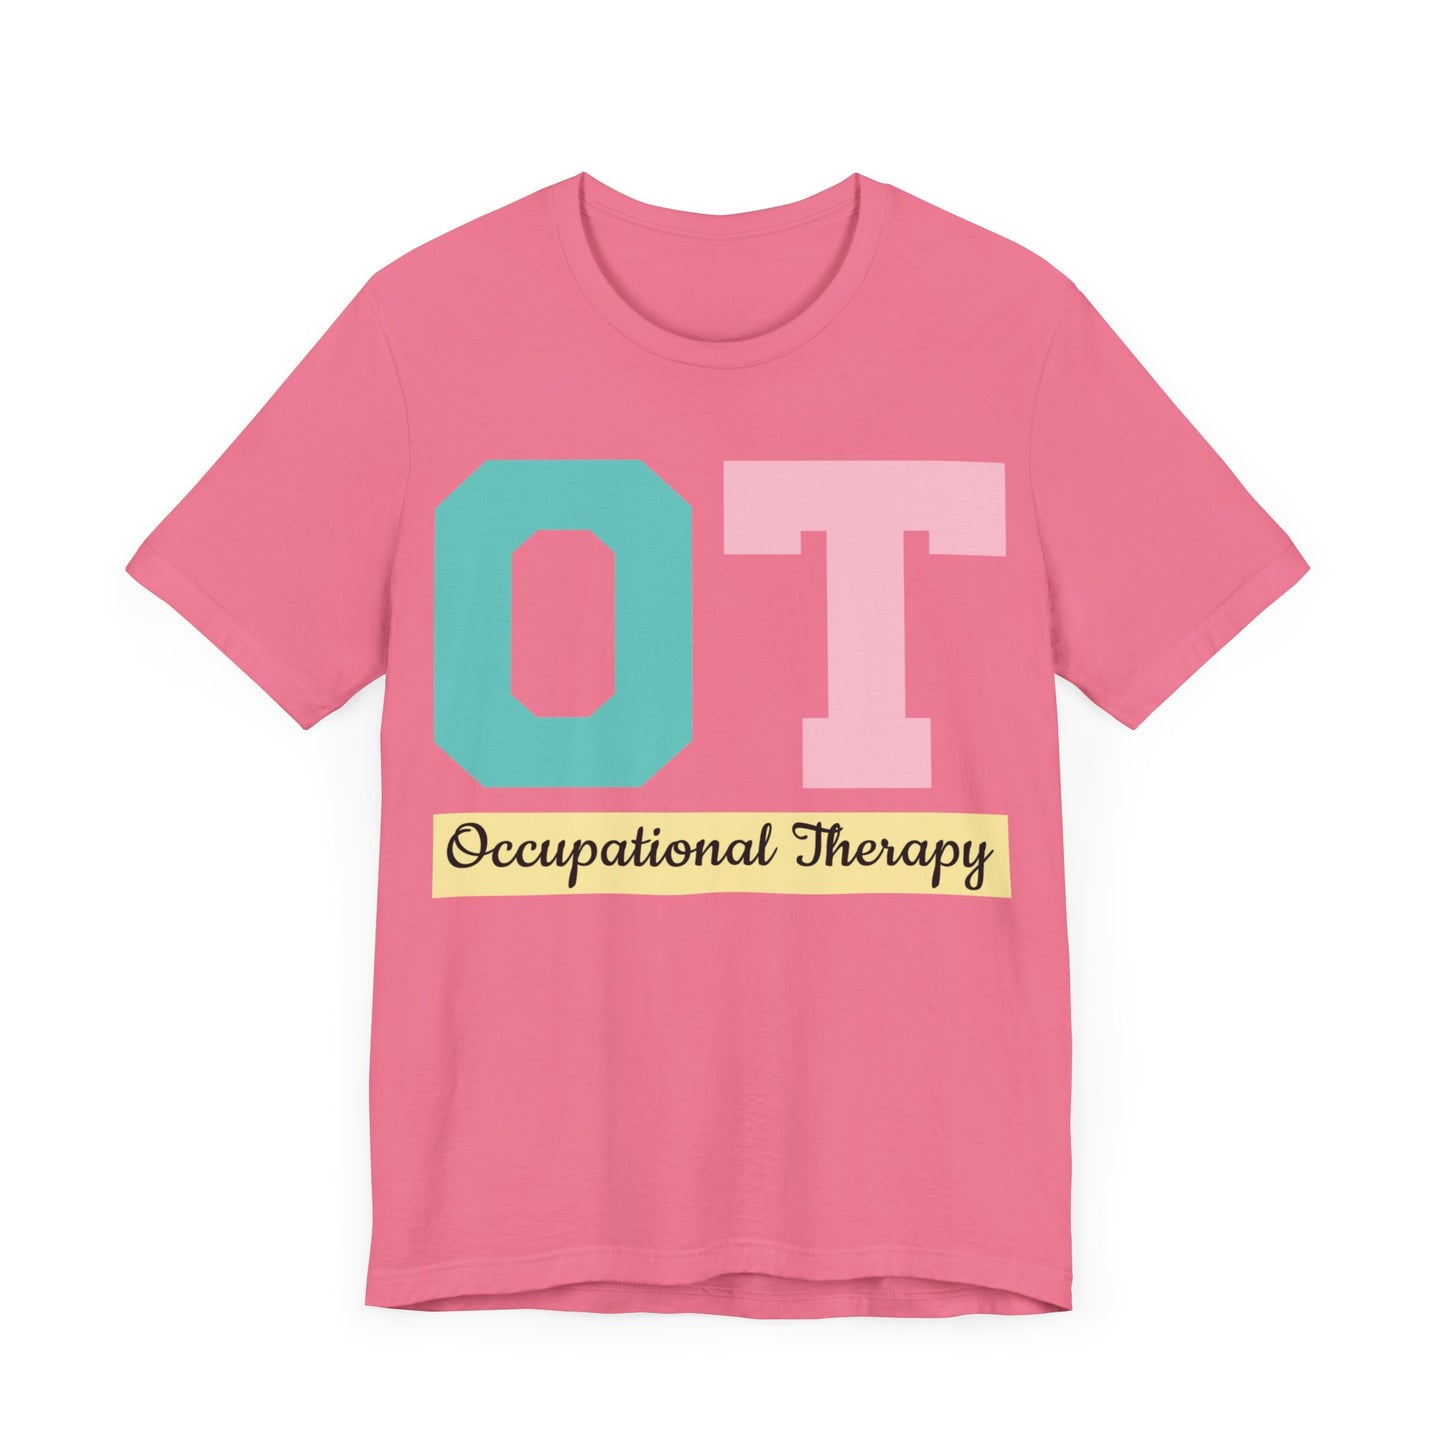 Occupational Therapy Shirt, OT Shirt, Therapist Shirt, OT Jasmine Shirt